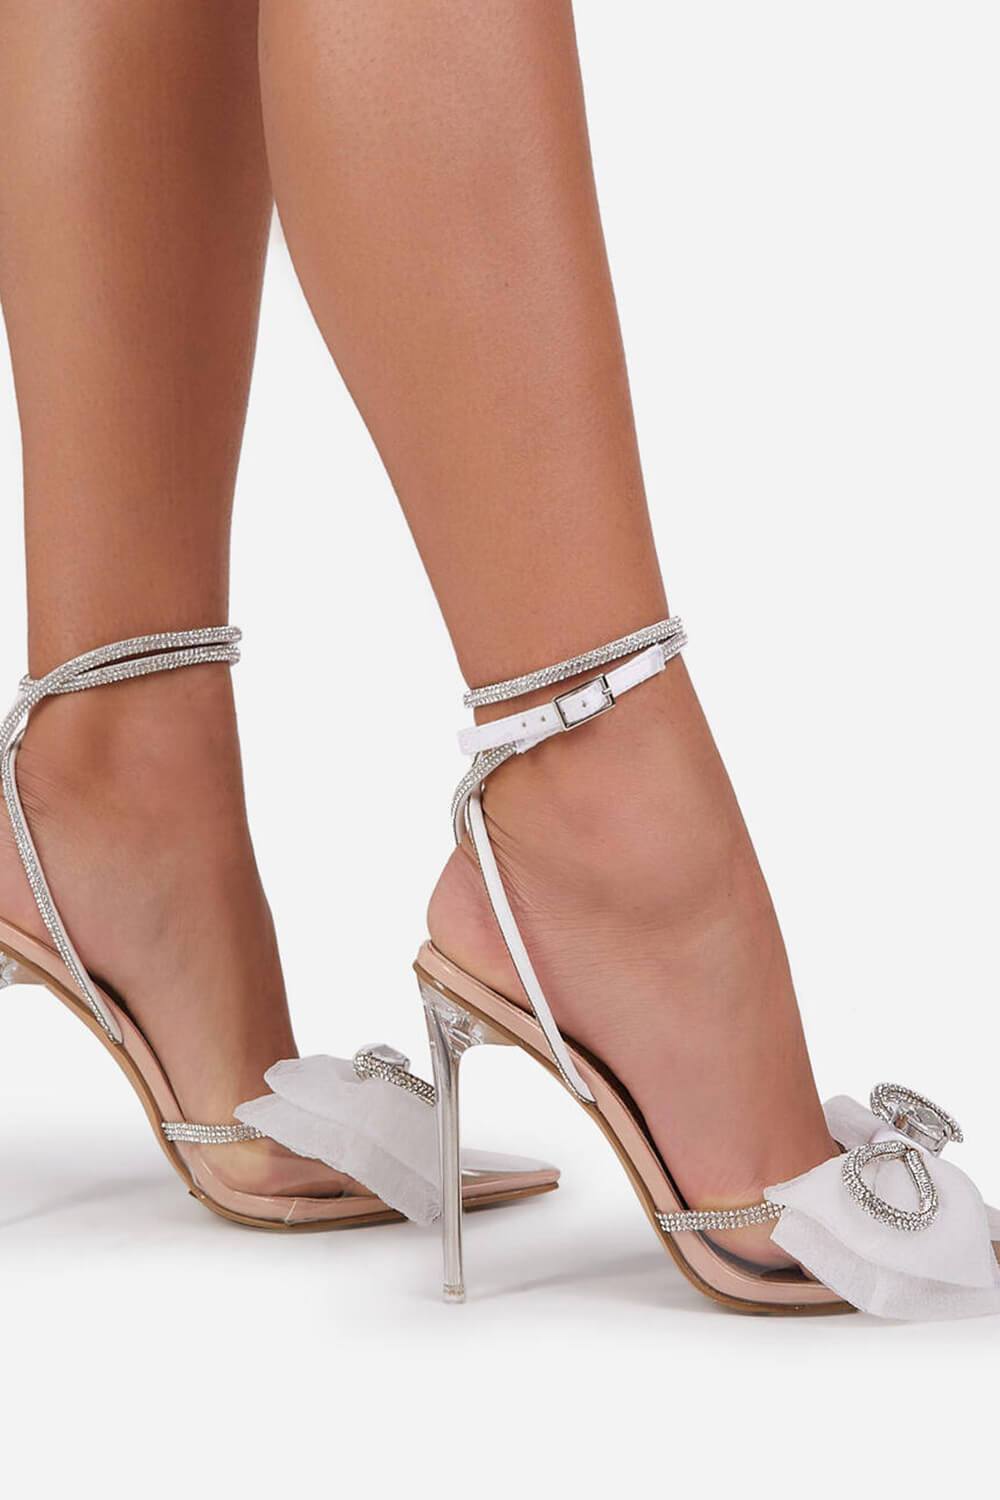 Nude Patent Bow Detail Diamante Wrap Around Clear Perspex Stiletto Heel